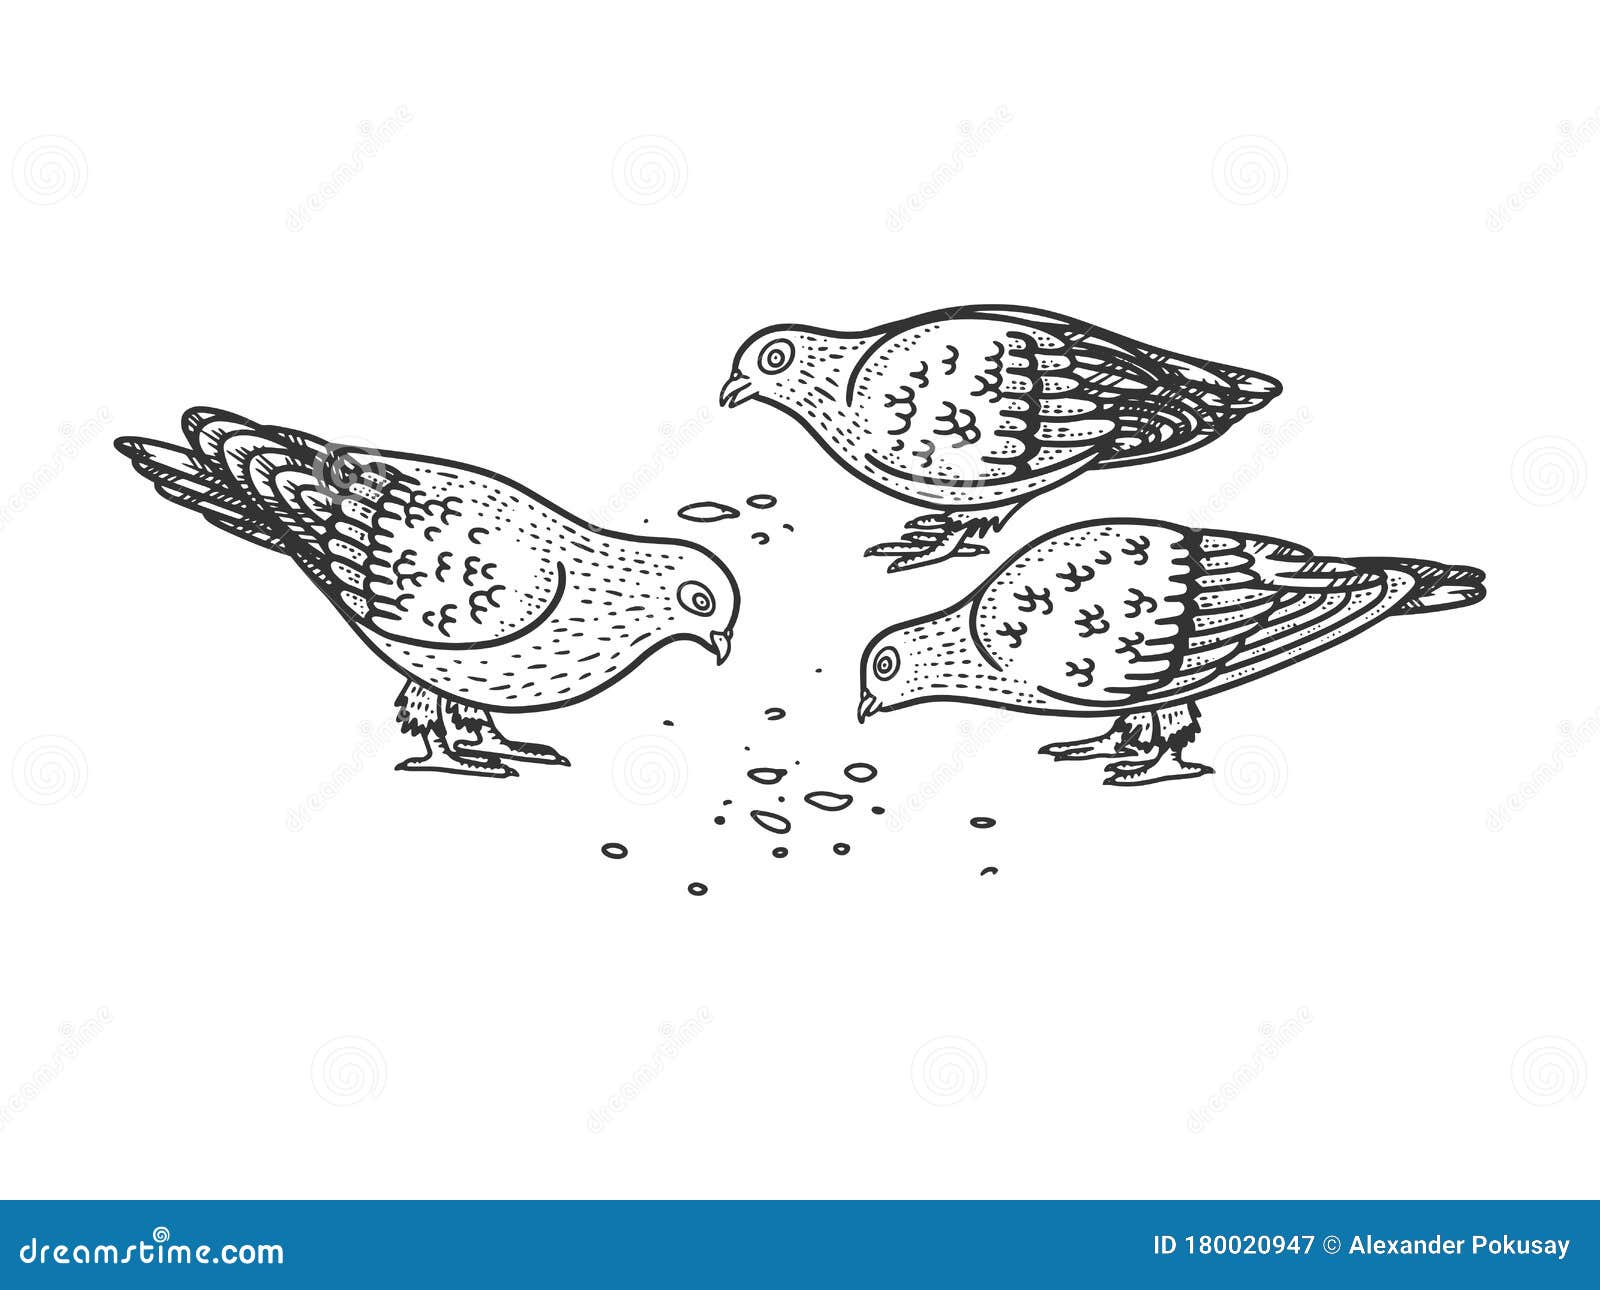 pigeons peck seeds sketch  